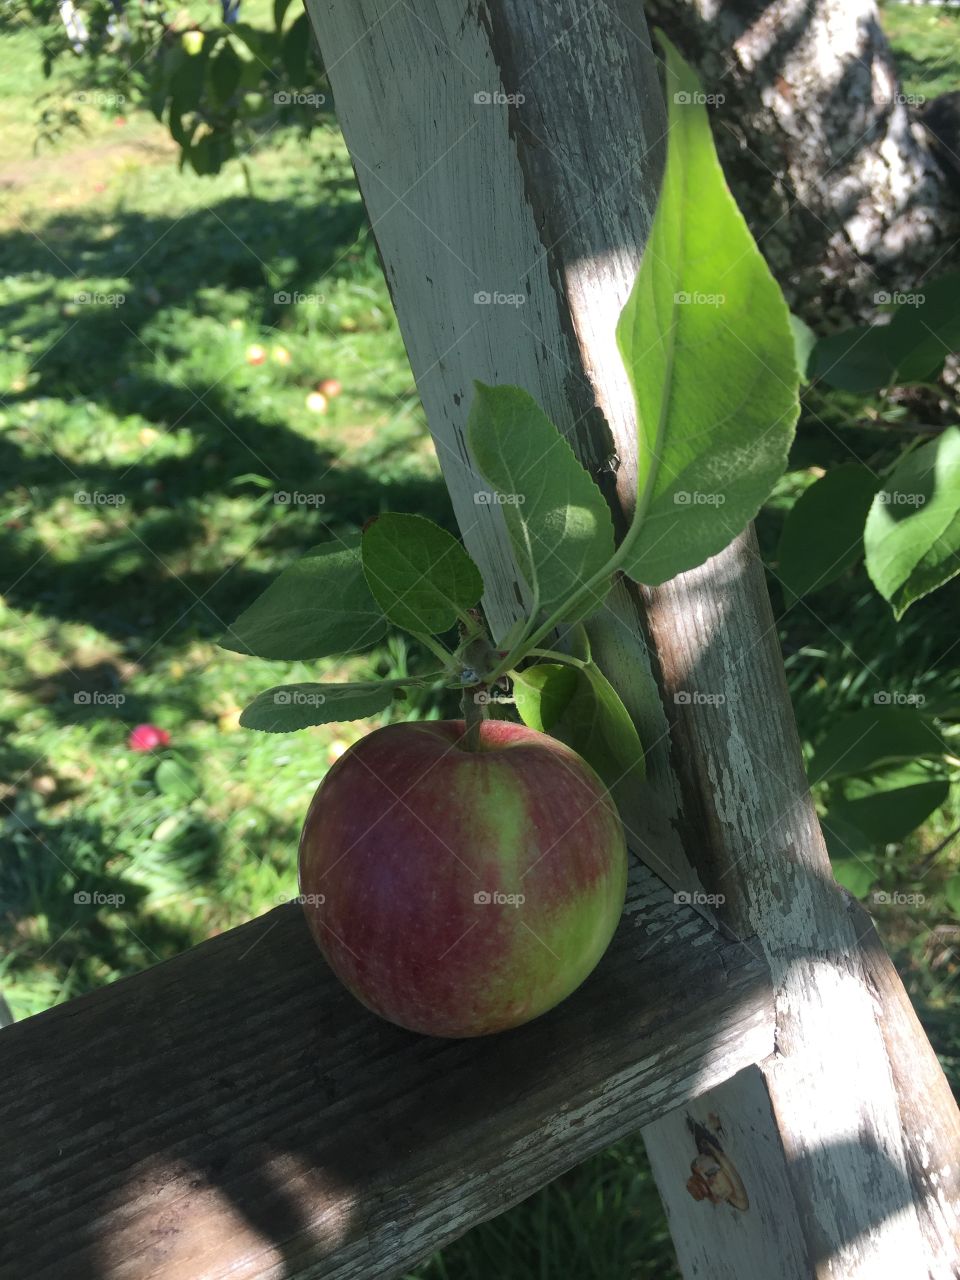 Just an apple